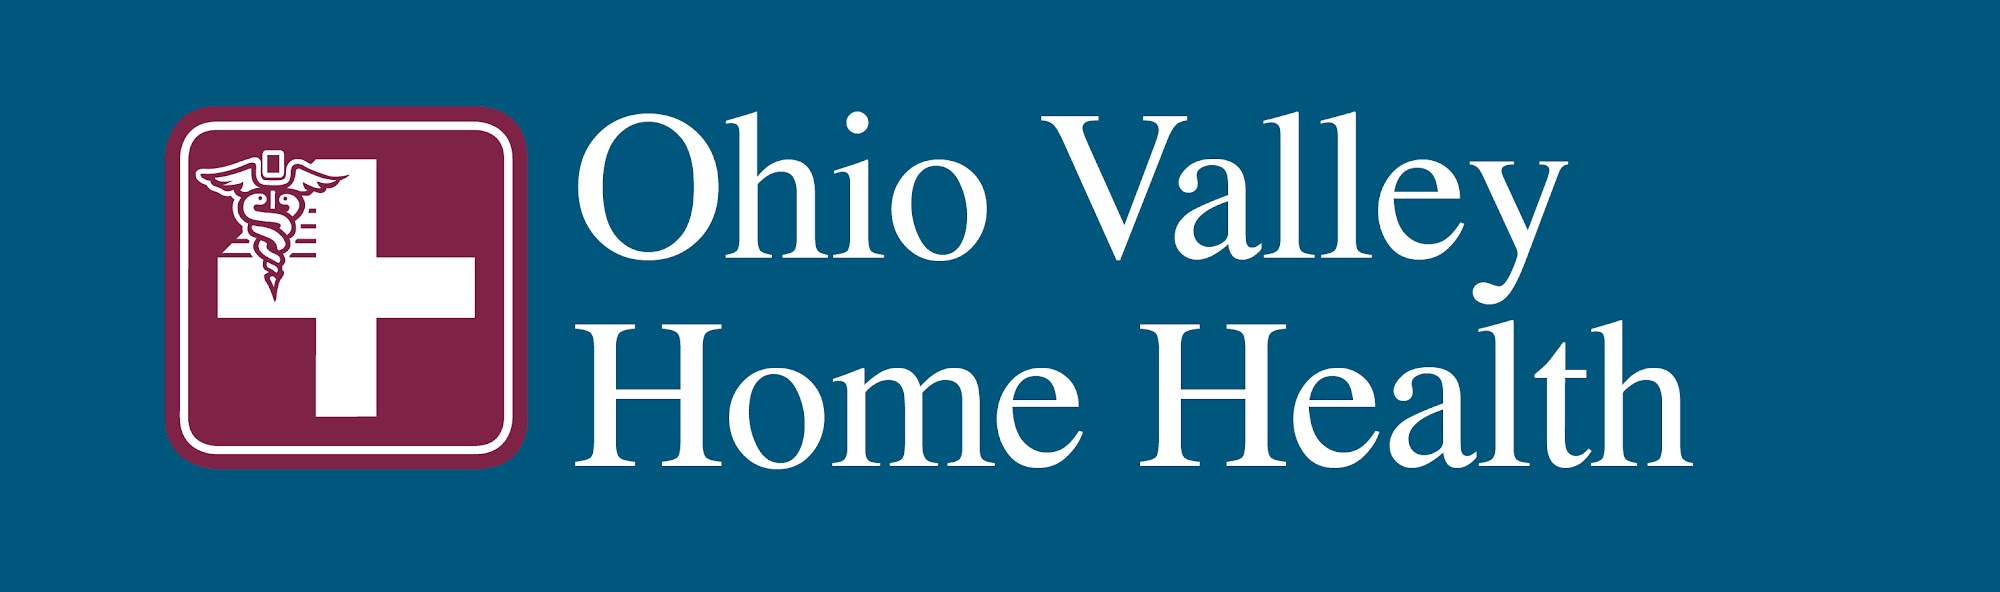 Ohio Valley Home Health 15549 OH-170 #7, East Liverpool Ohio 43920